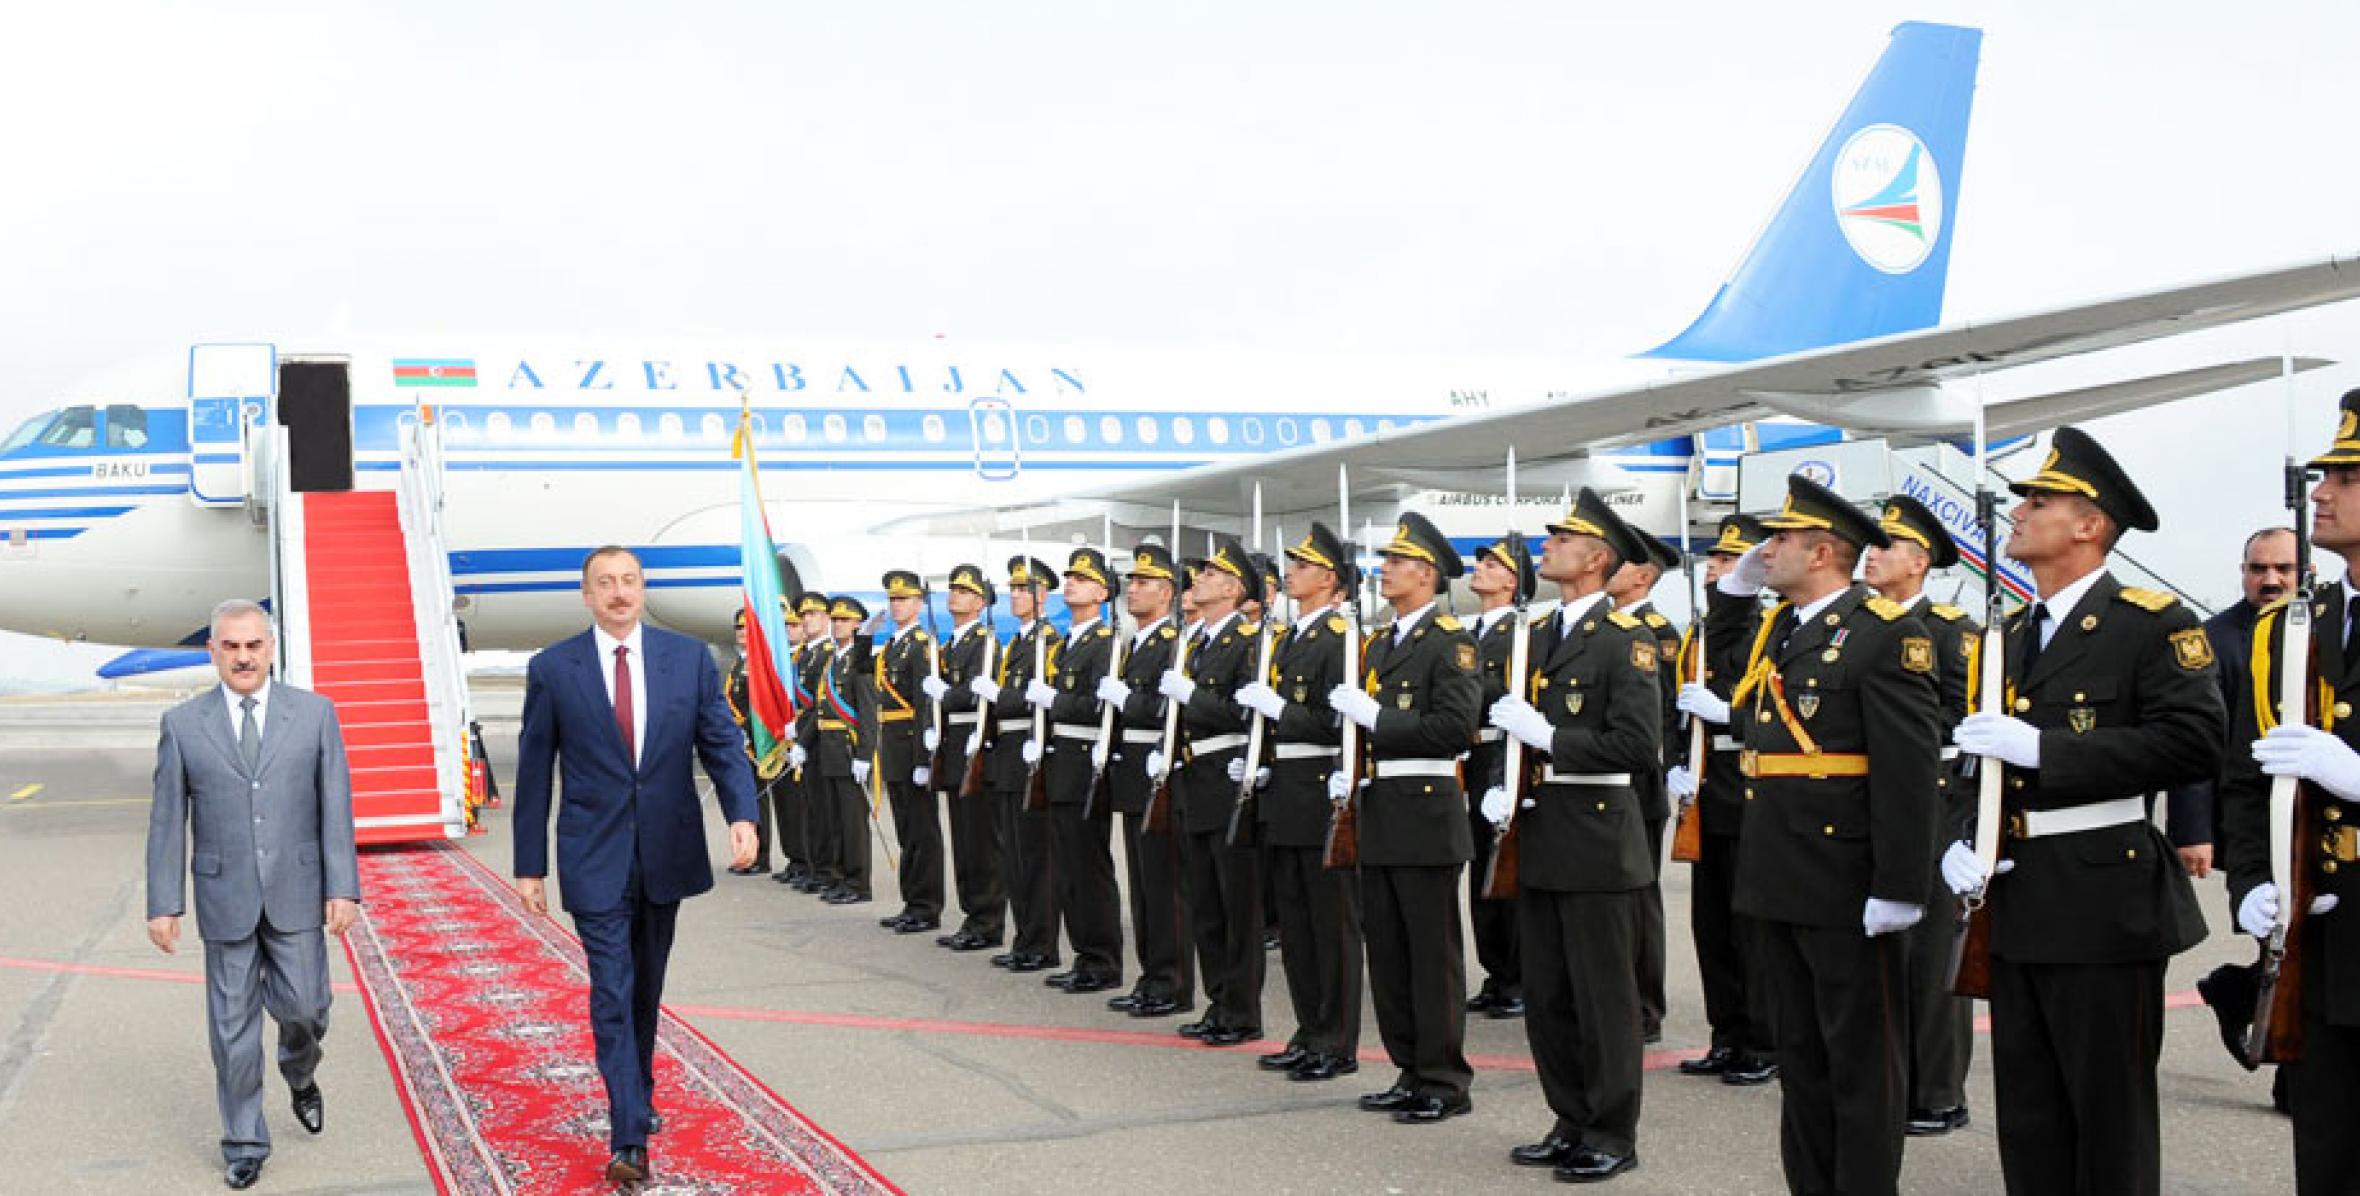 Ilham Aliyev arrived in Nakhchivan Autonomous Republic